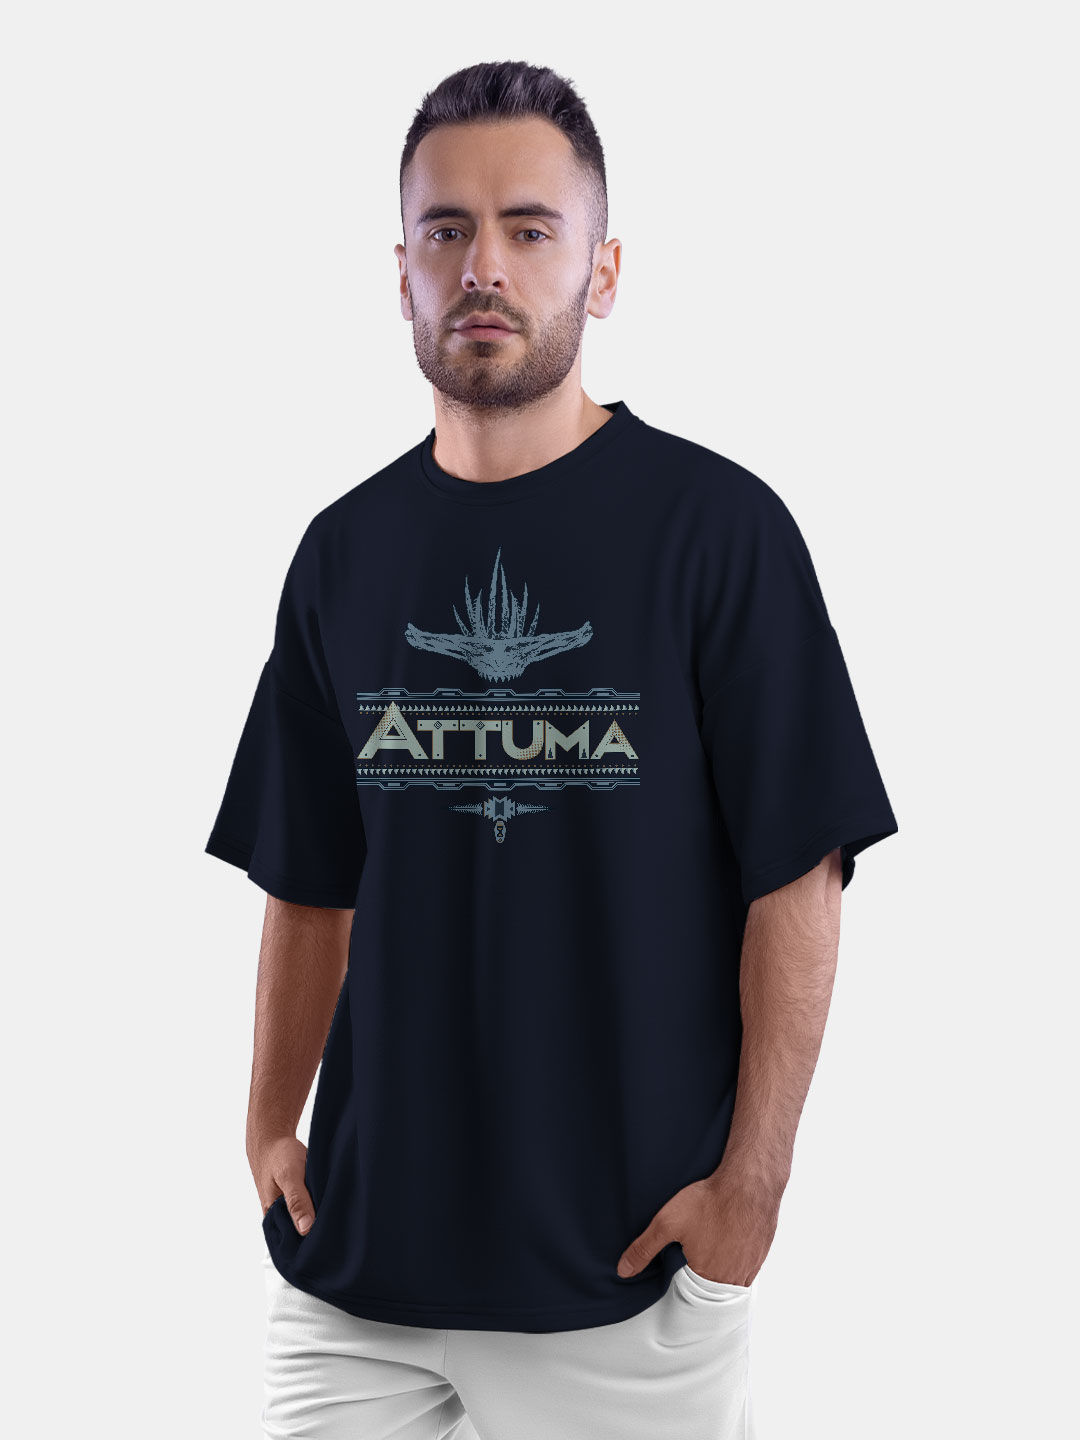 Buy Wakanda Forever Attuma Navy Blue - Male Oversized T-Shirt T-Shirts Online